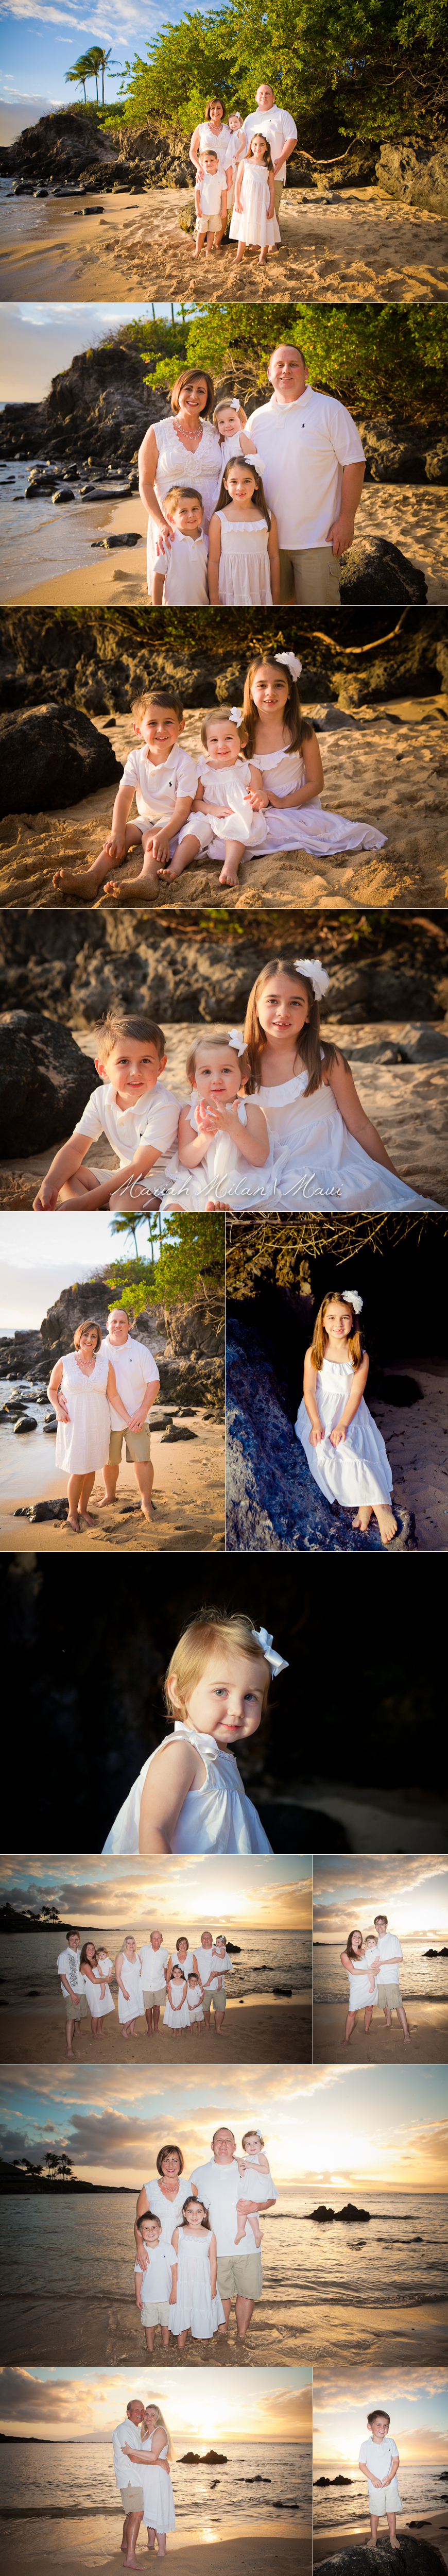 Maui Photo Session at Kapalua Bay